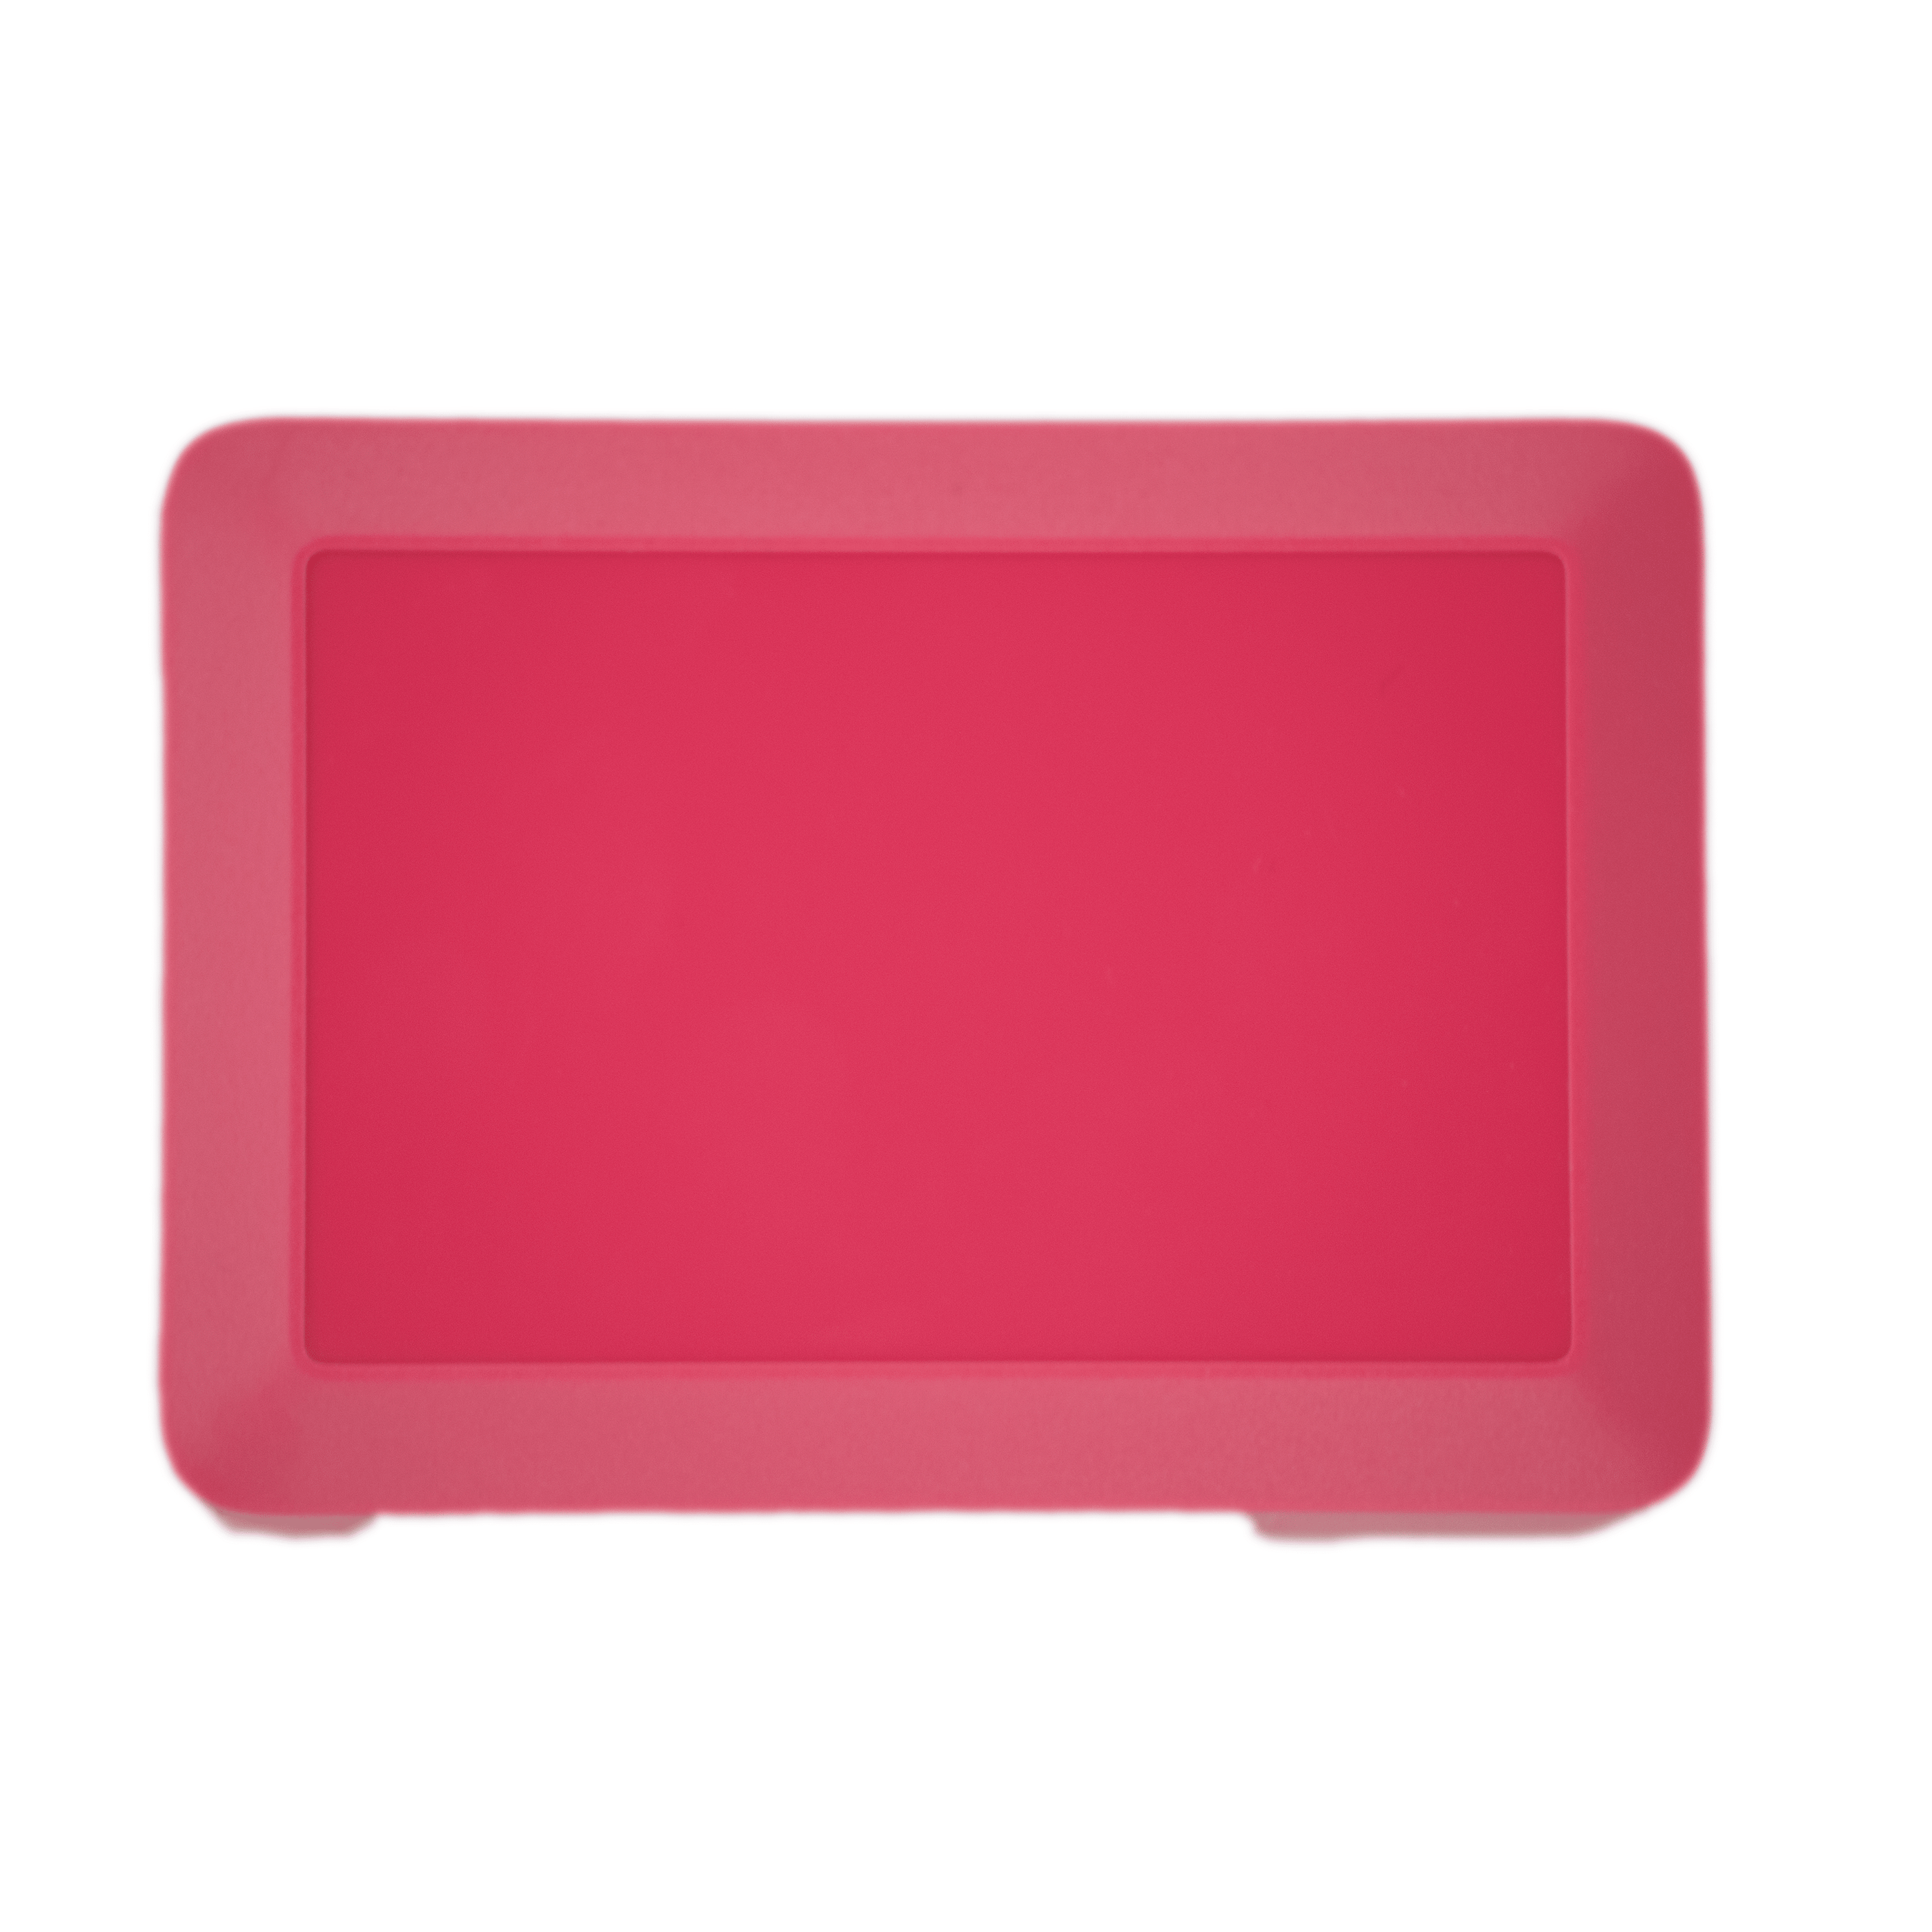 Modular Raspberry Pi 3 Case - Pink - The Pi Hut